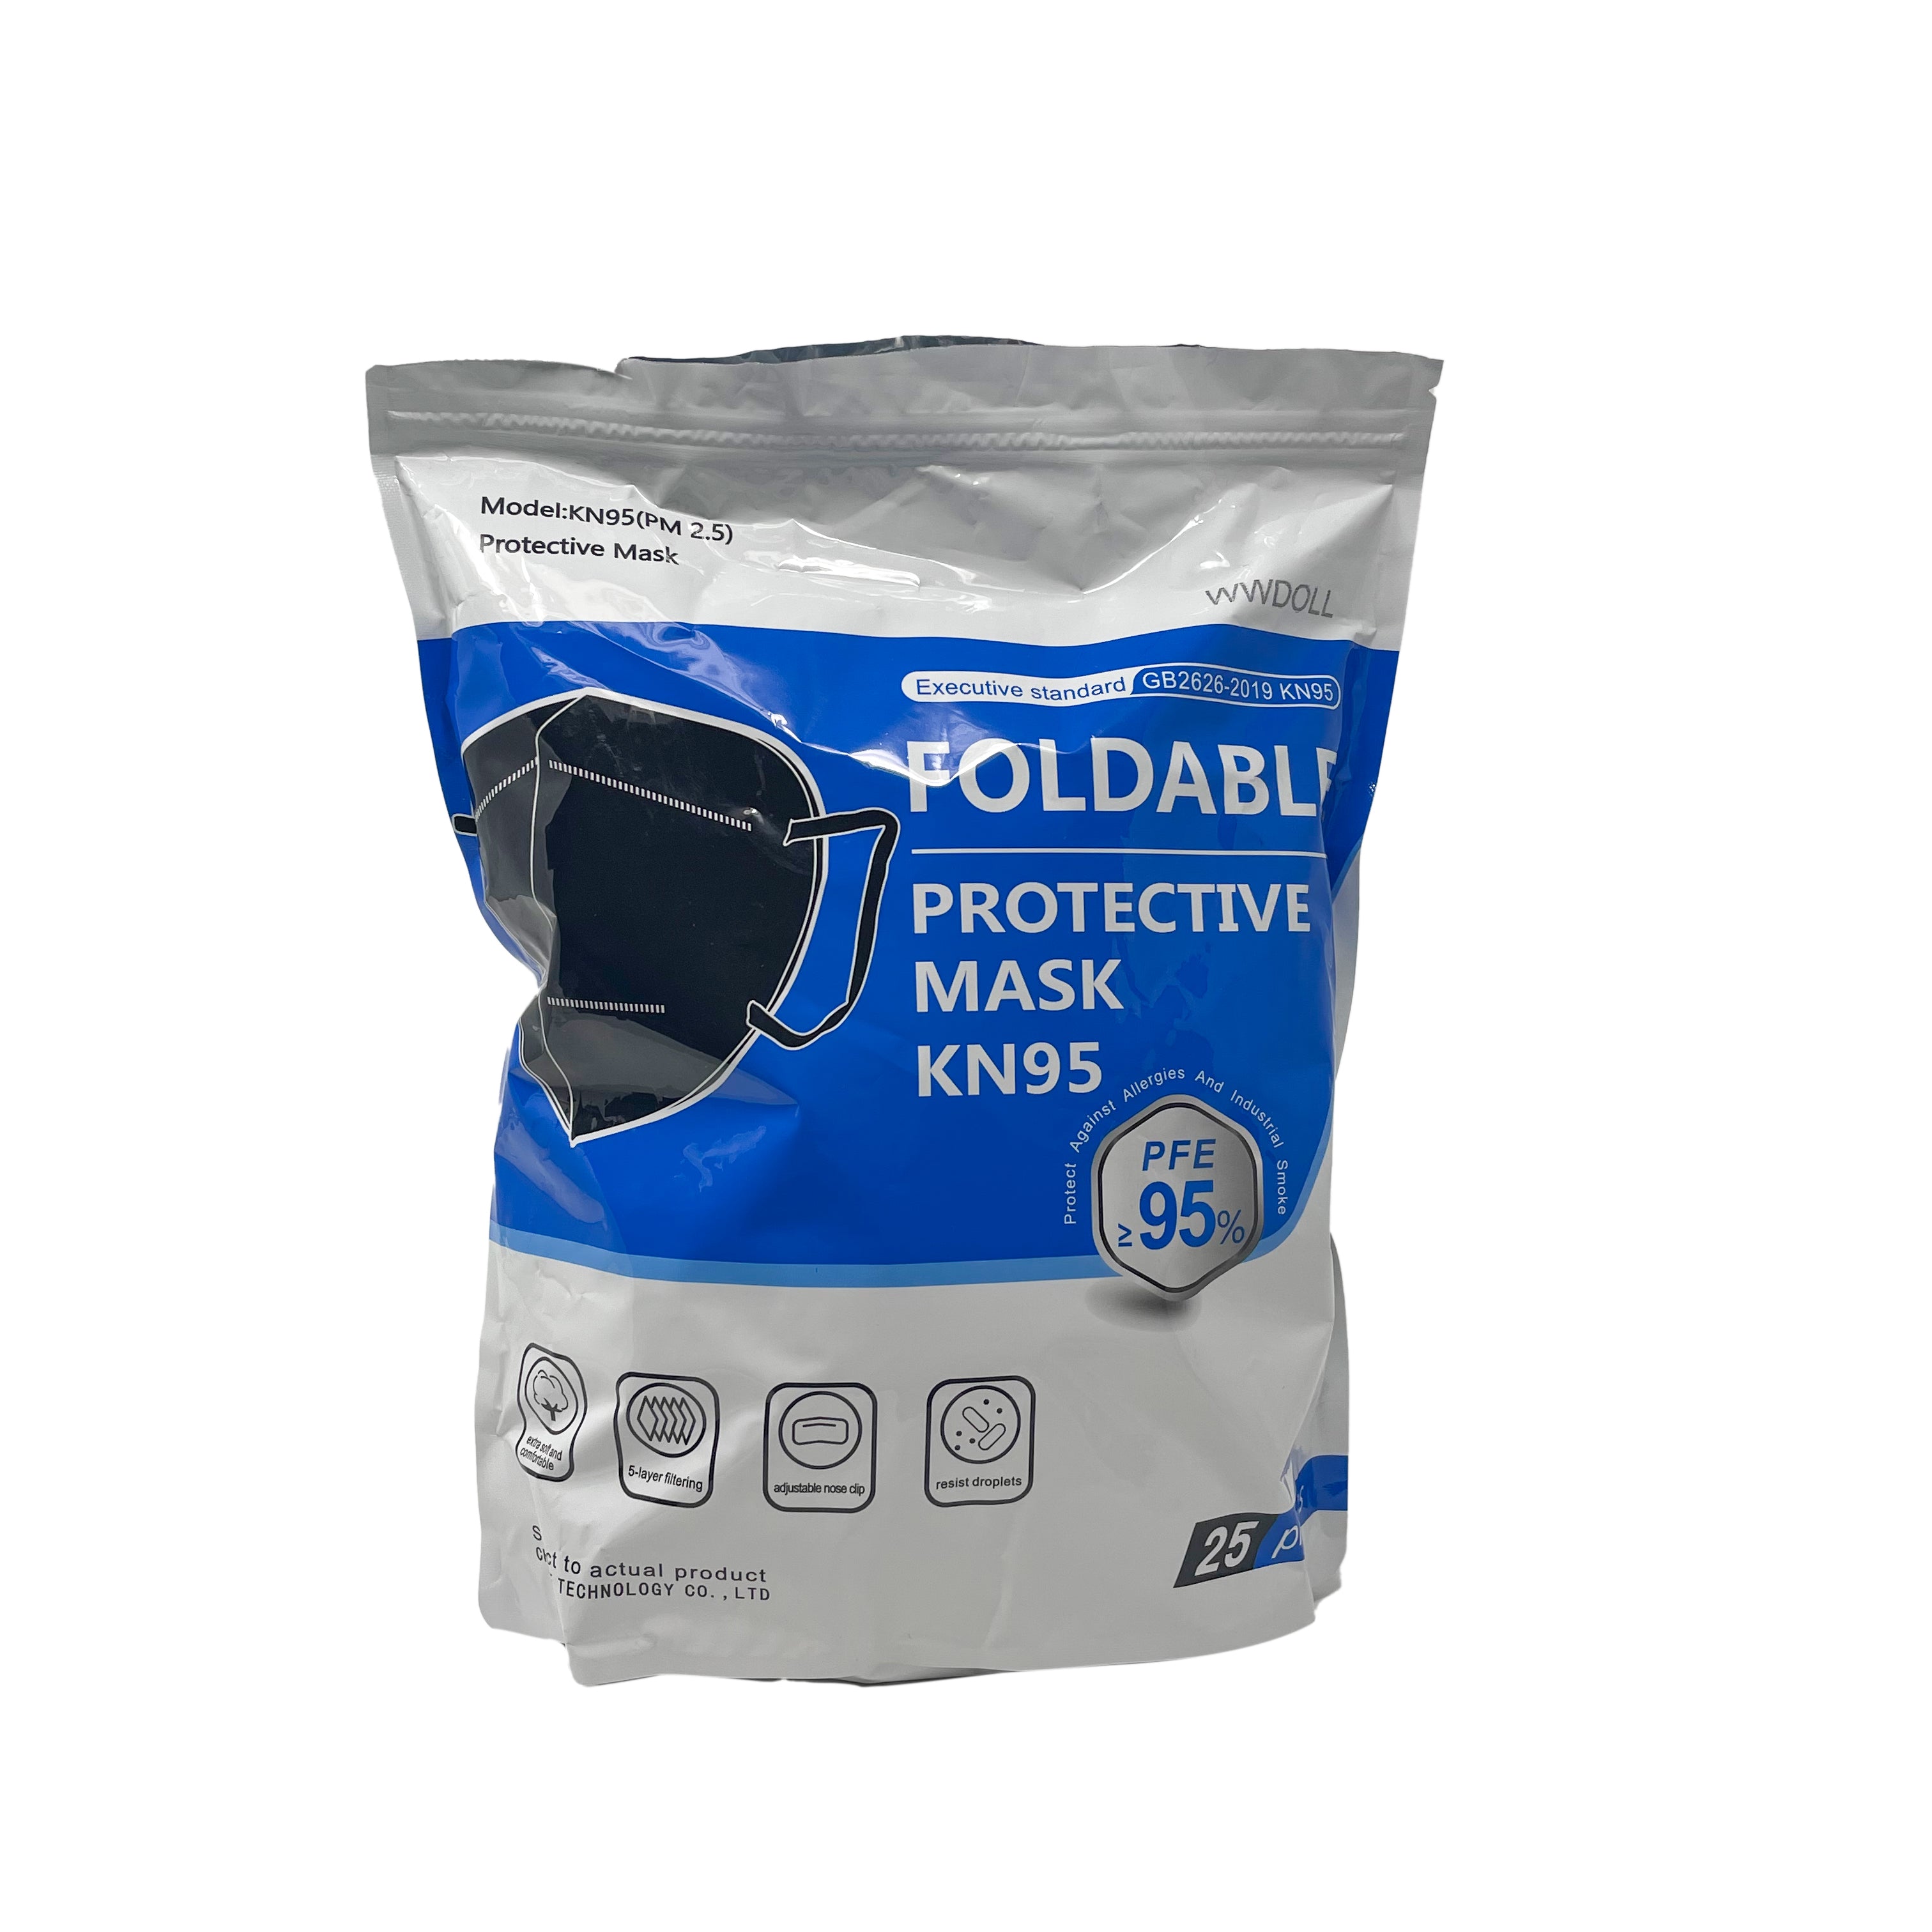 WWDOLL KN95 Foldable 95% PFE Protective Mask